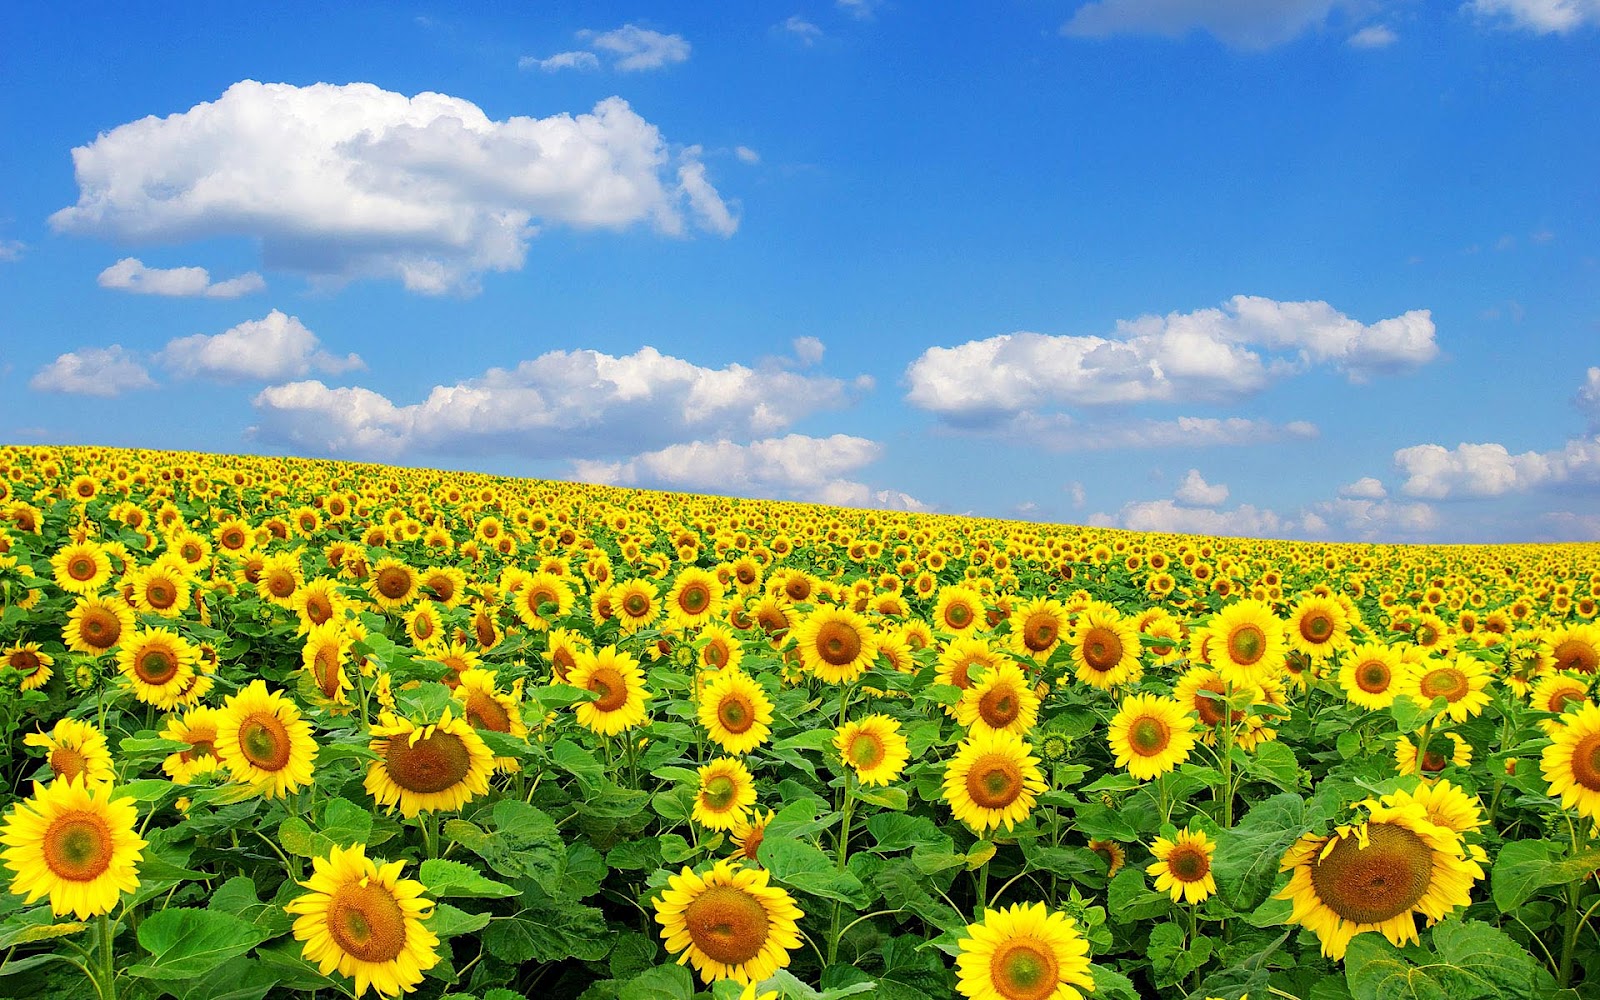 sonnenblume desktop hintergrund,blume,sonnenblume,blühende pflanze,feld,himmel